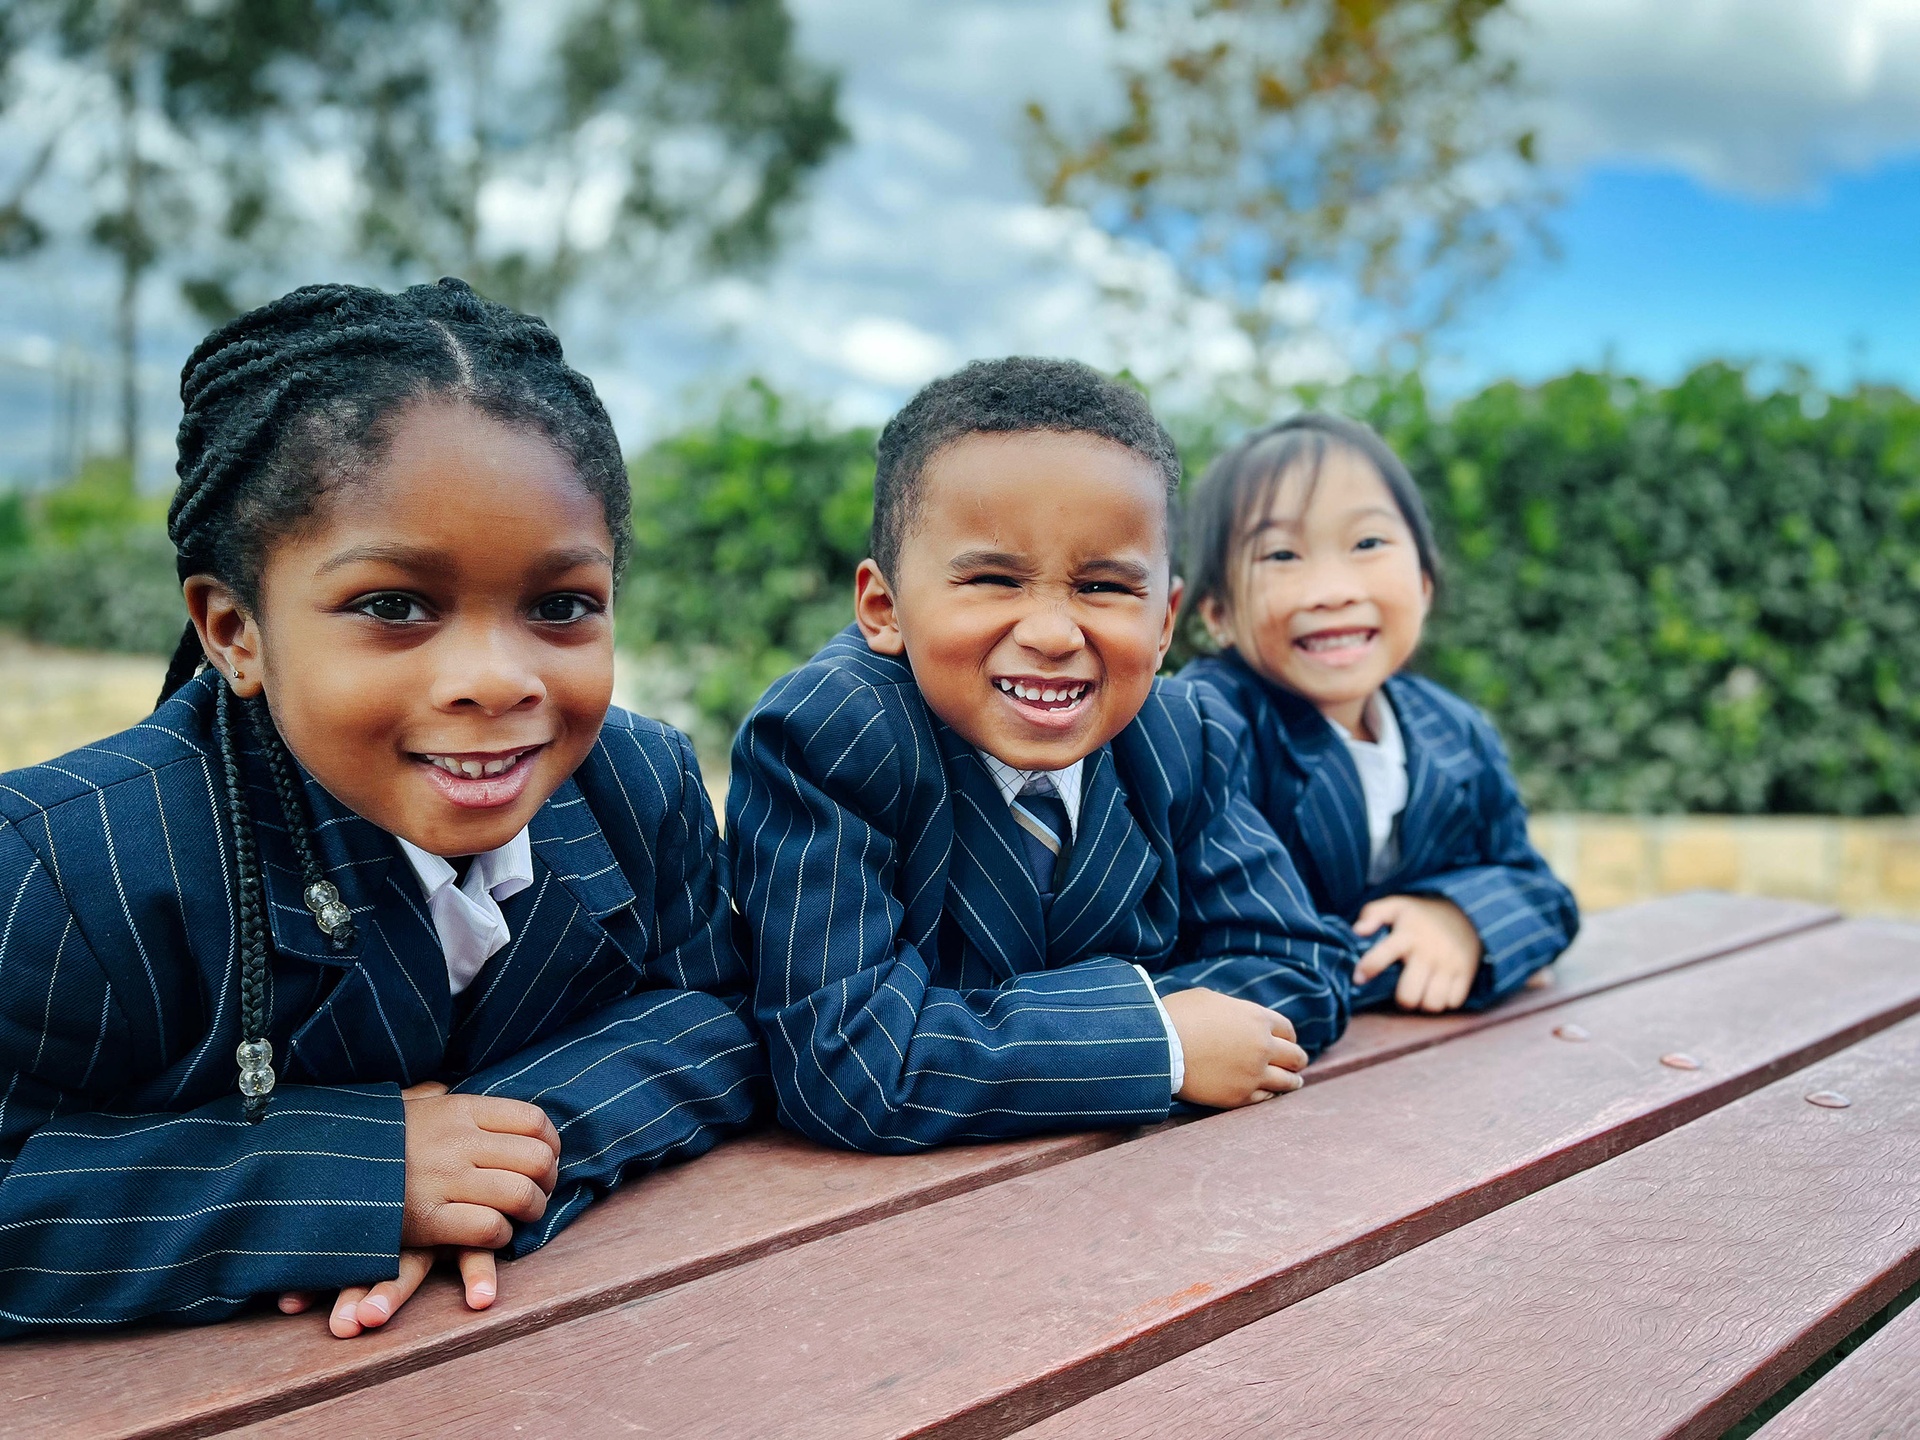 Three Marsden Park Kindergarten students in blazers sitting at bench